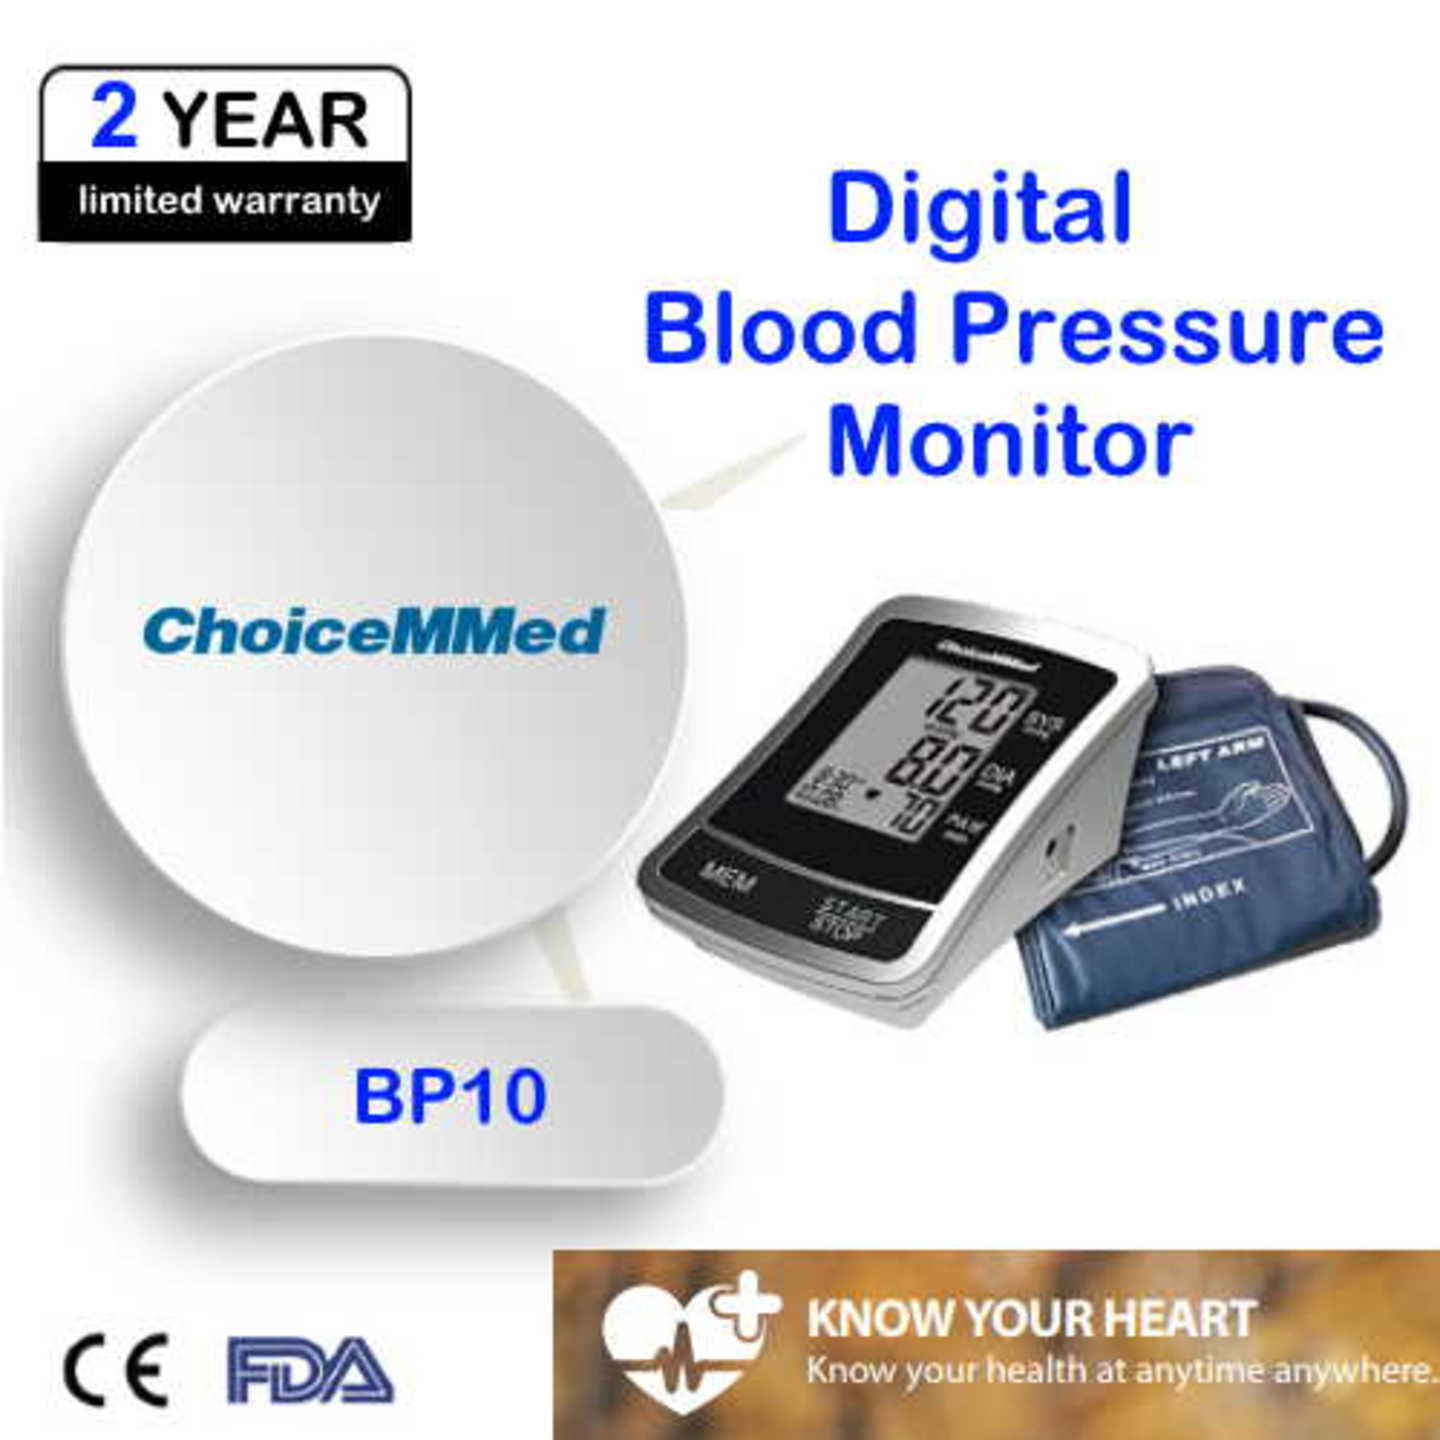 ChoiceMMed Blood Presssure Monitor - BP10